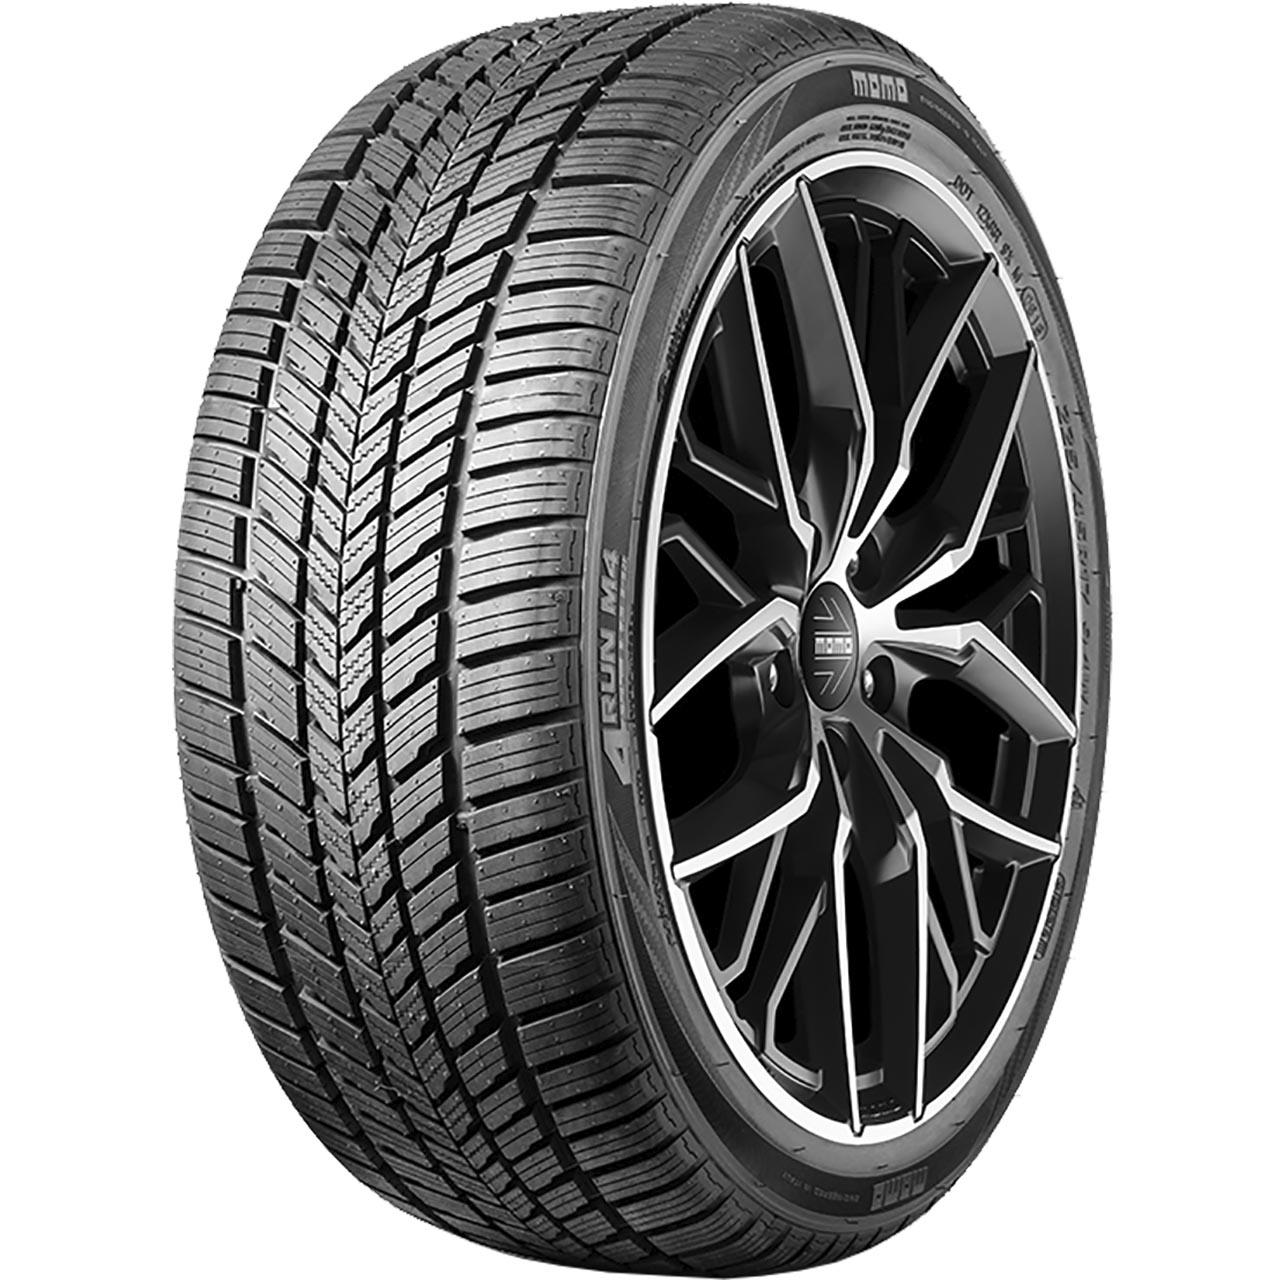 Momo Tire M 4 Four Season 195/65R15 91H